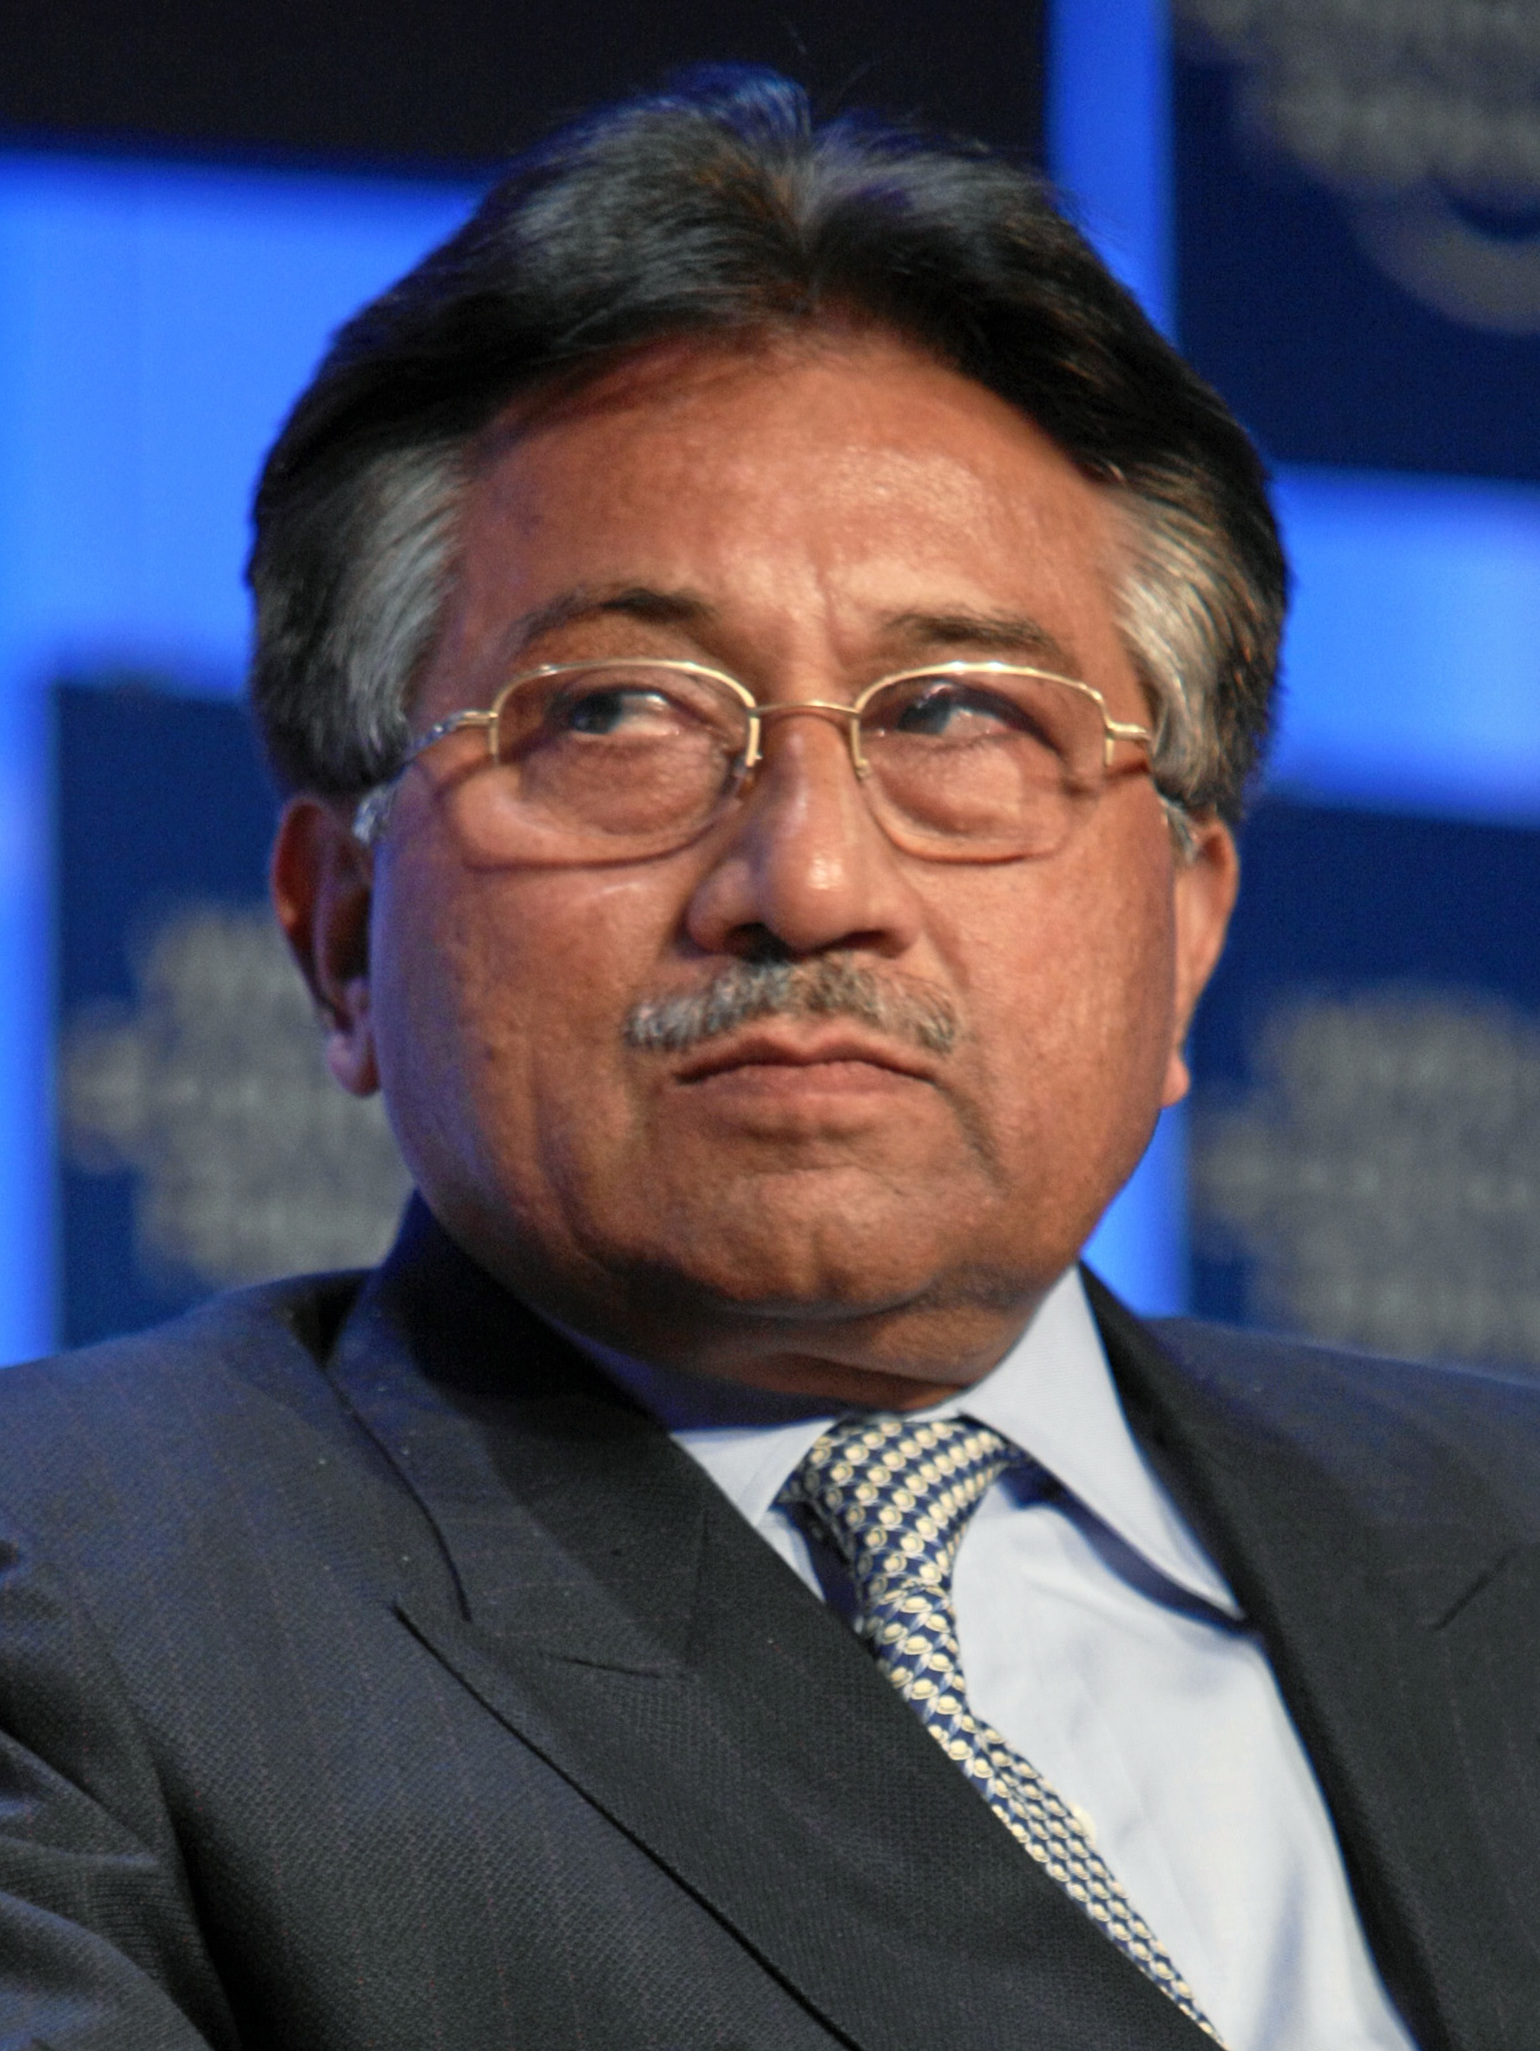 Pakistan's mission in UAE confirms death of former president Pervez Musharraf